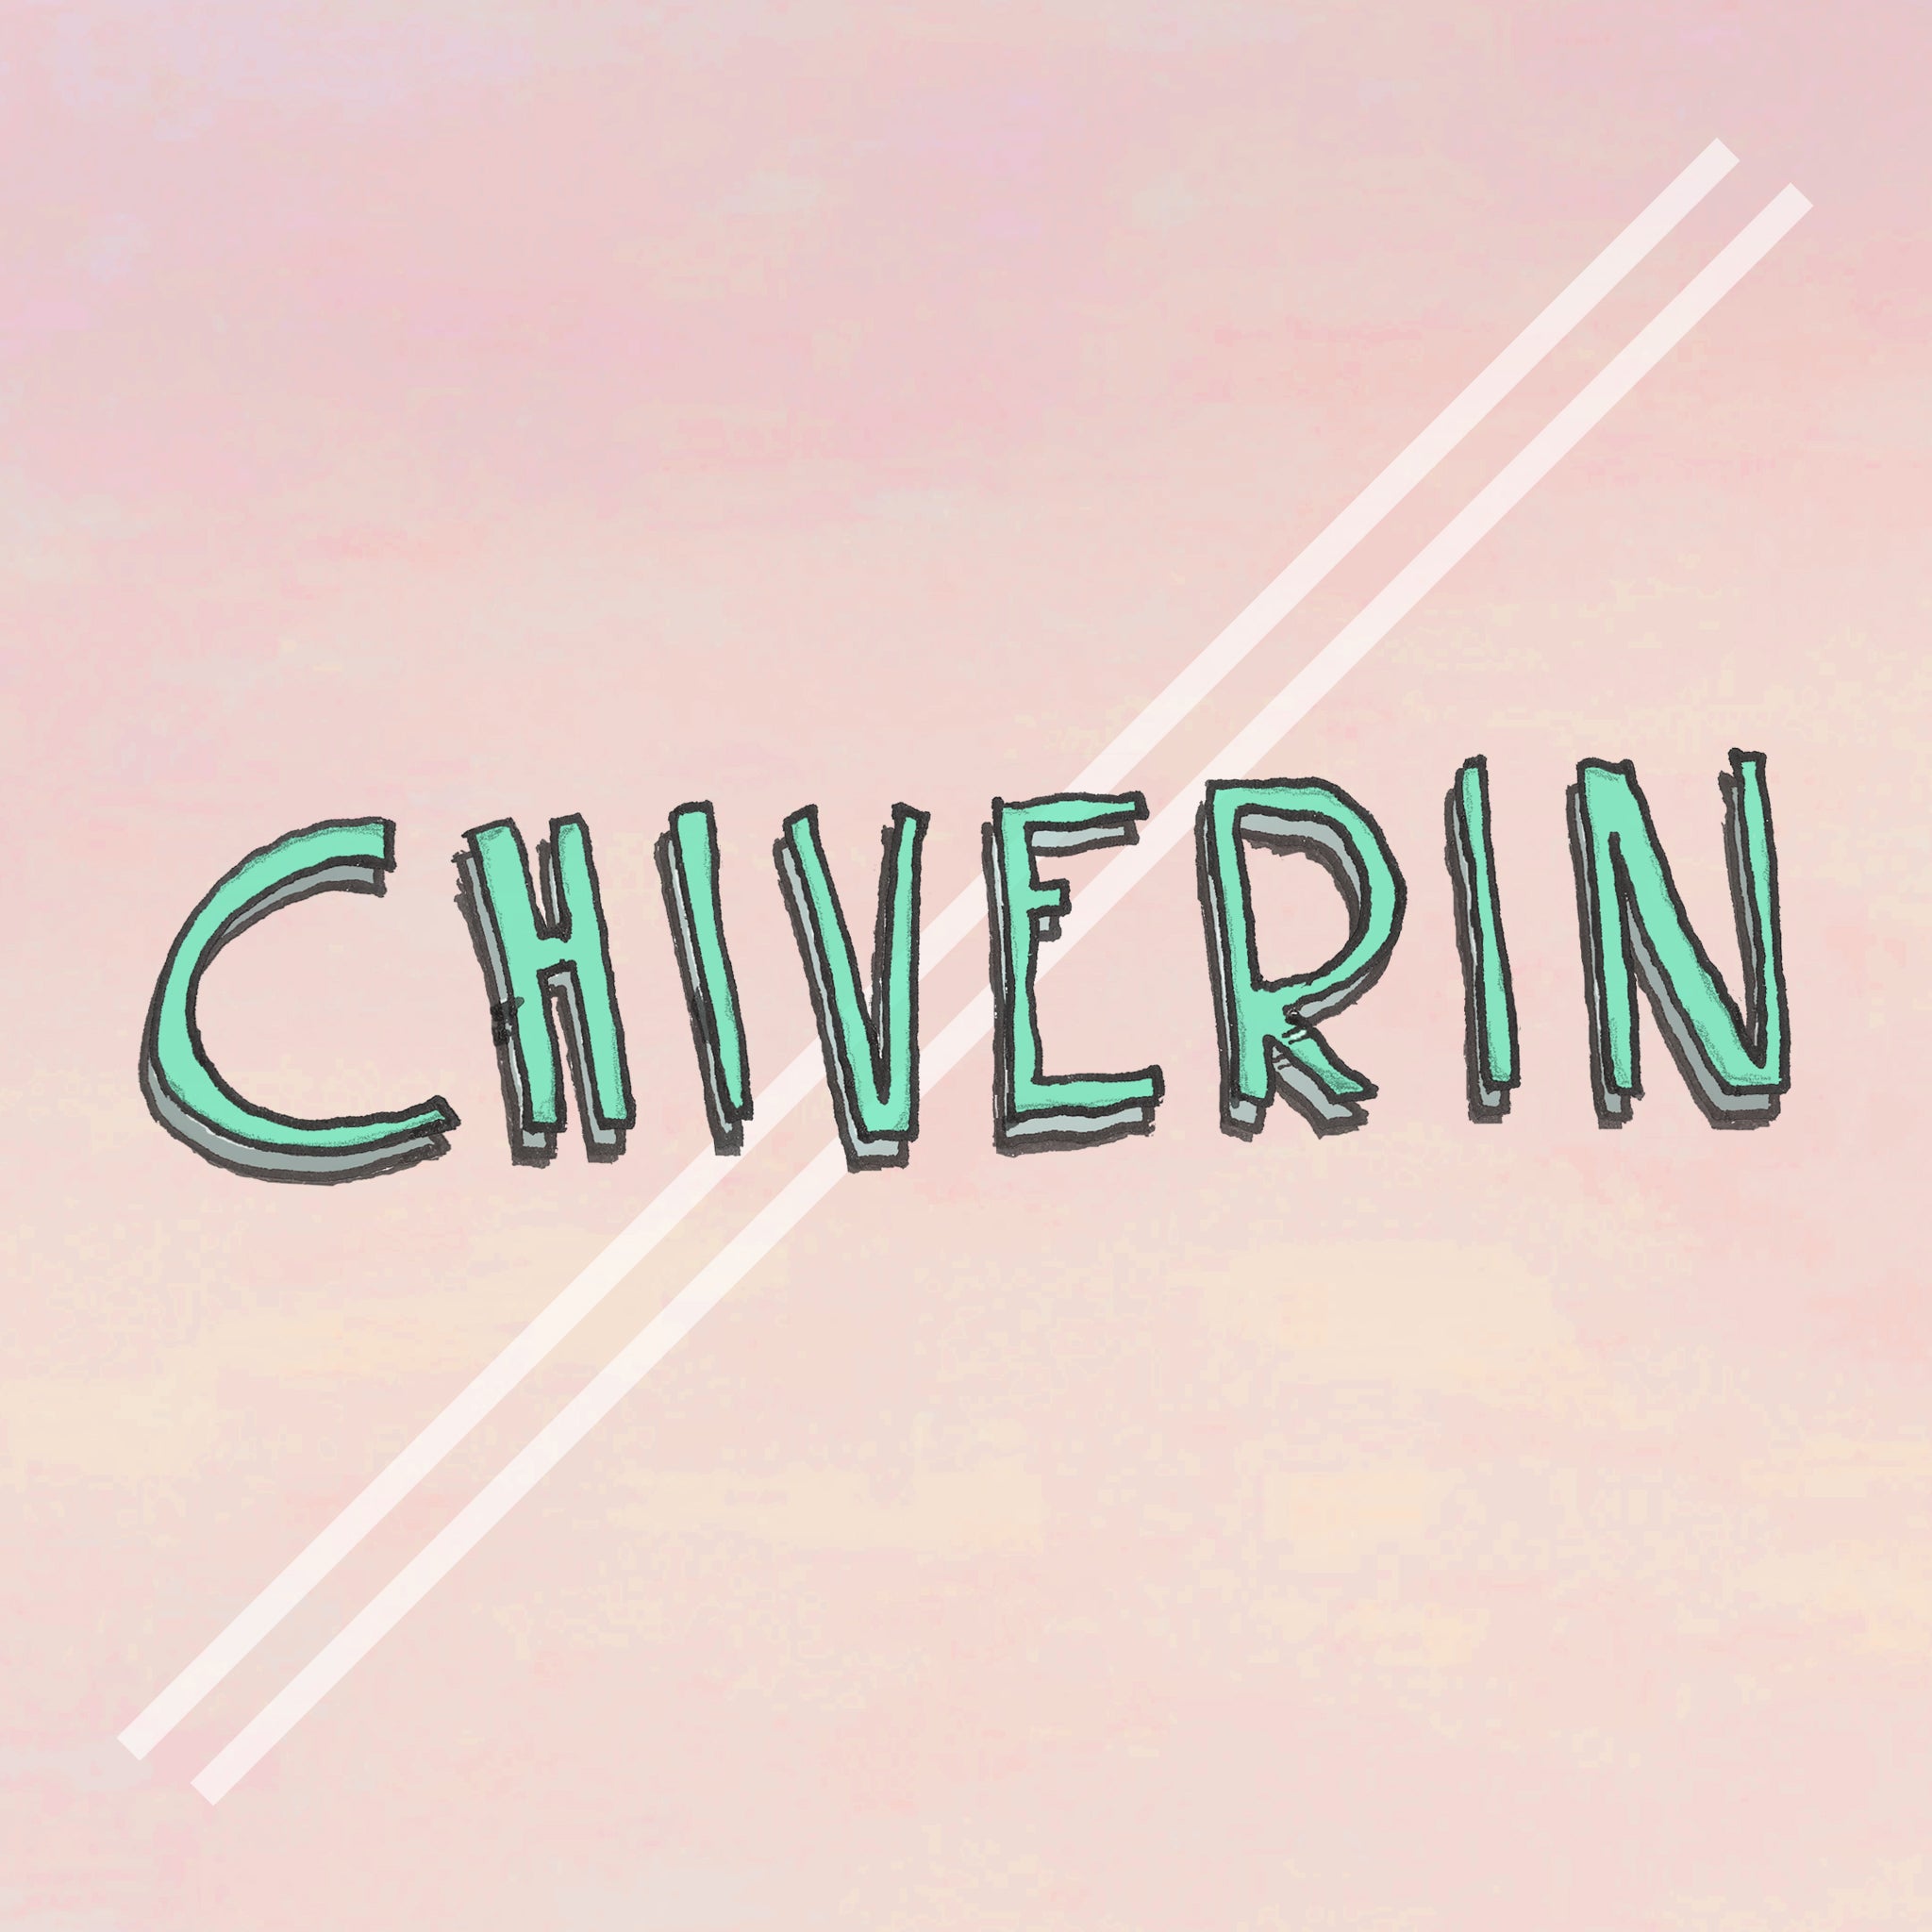 Chiverin